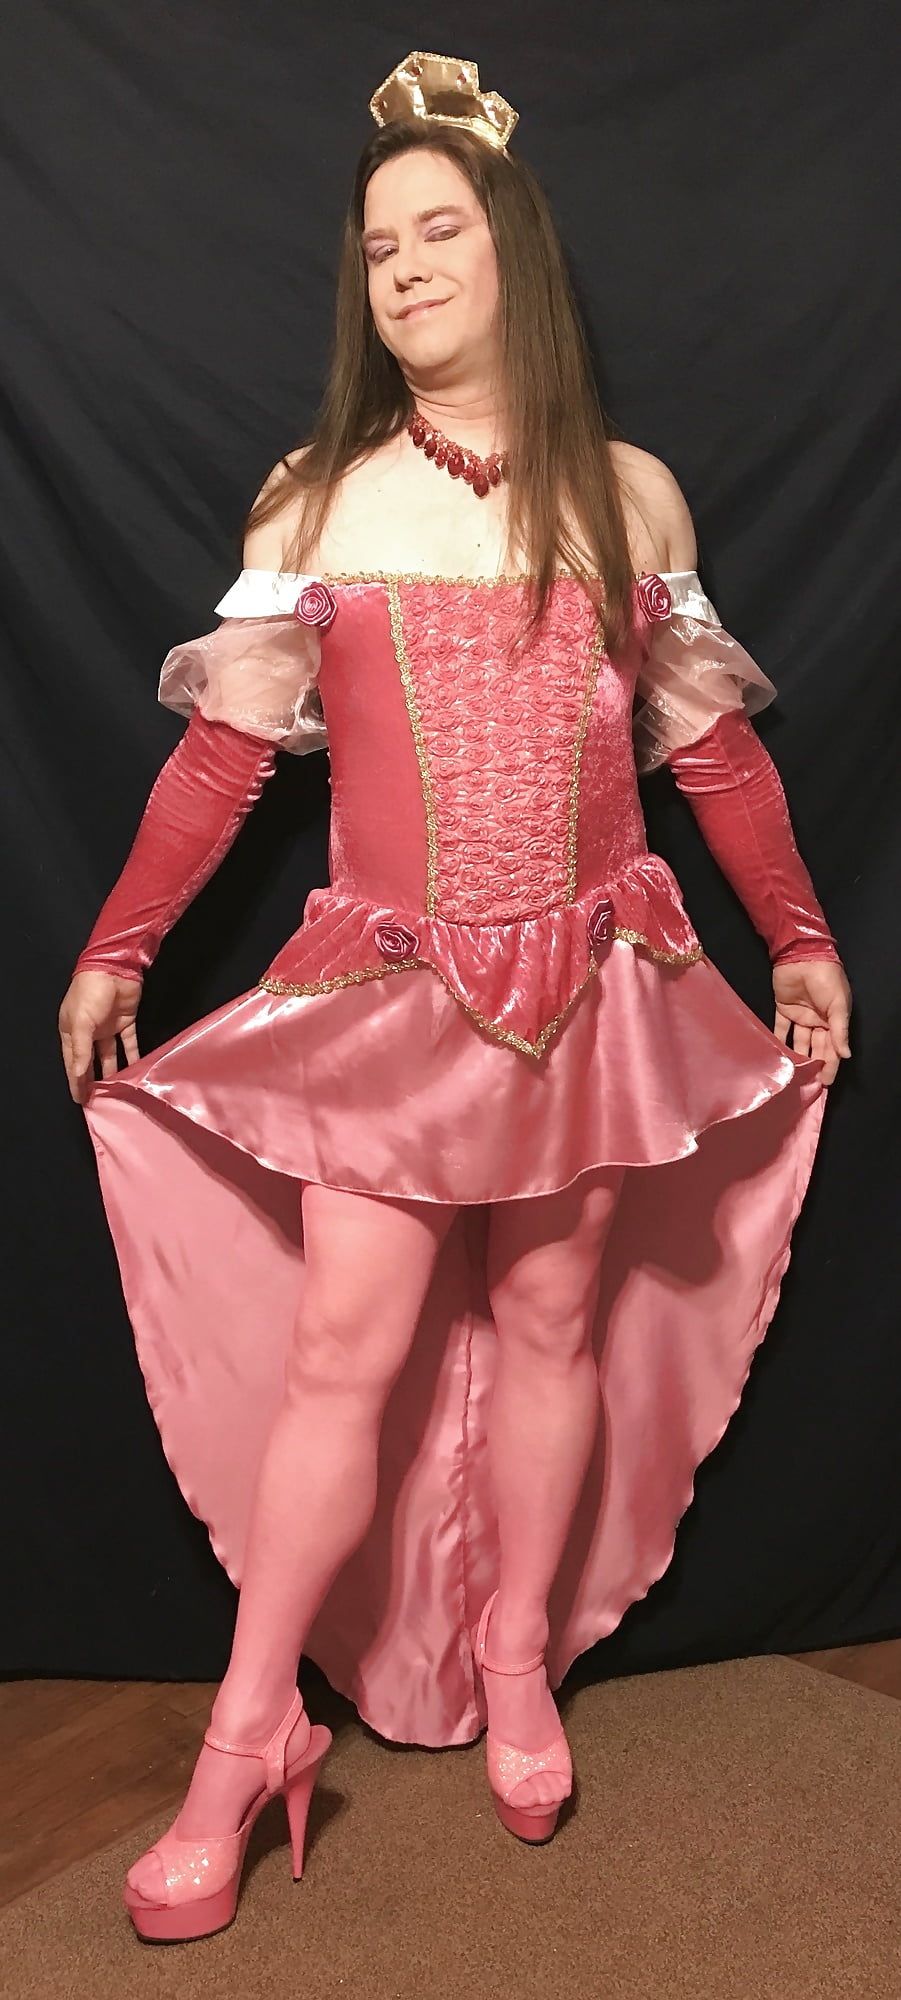 Joanie - Pink Princess #22